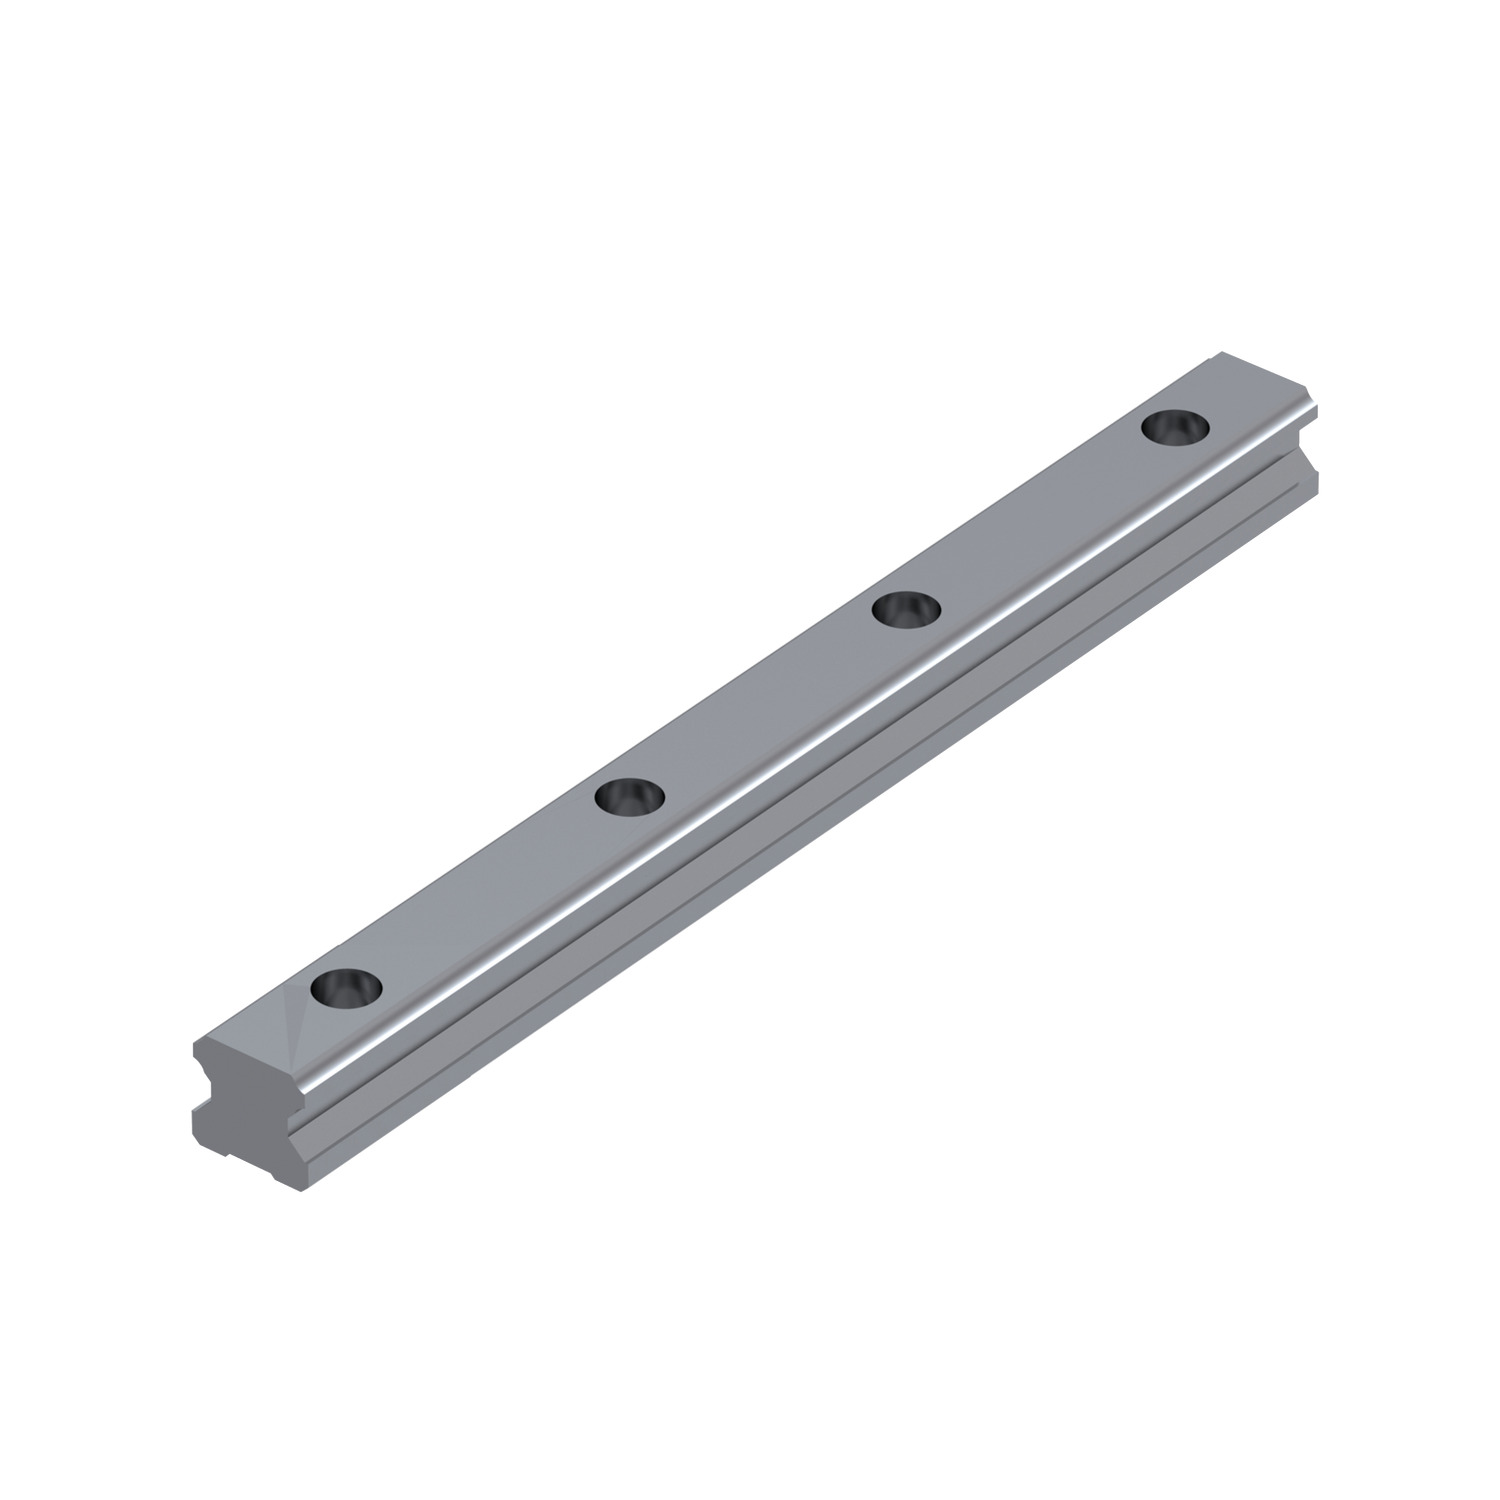 Product L1016.20, 20mm Linear Guide Rail standard / 